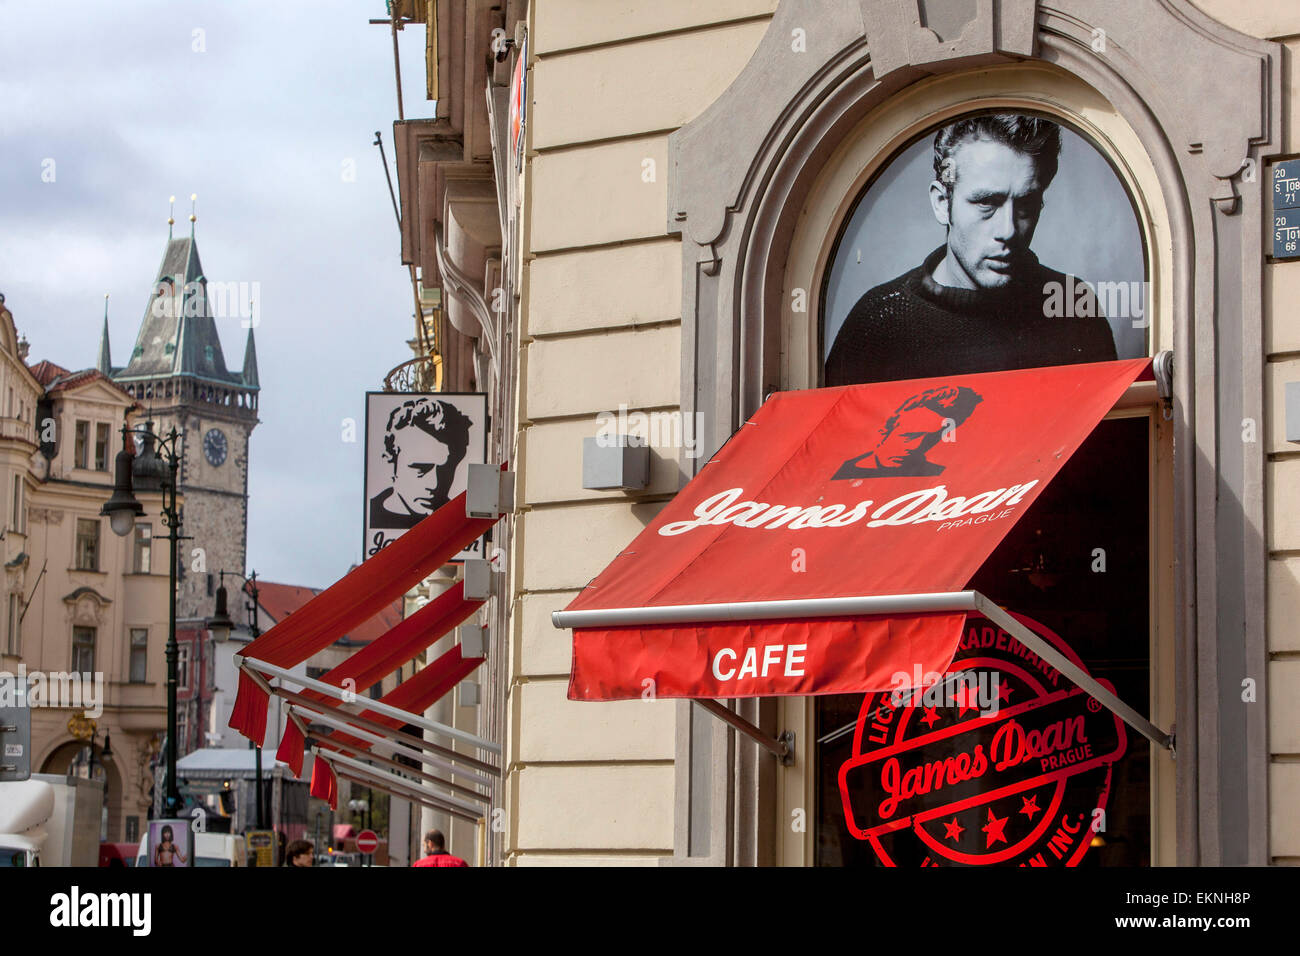 'James Dean Bar' in Dlouha street Prague Czech Republic, Europe Stock Photo